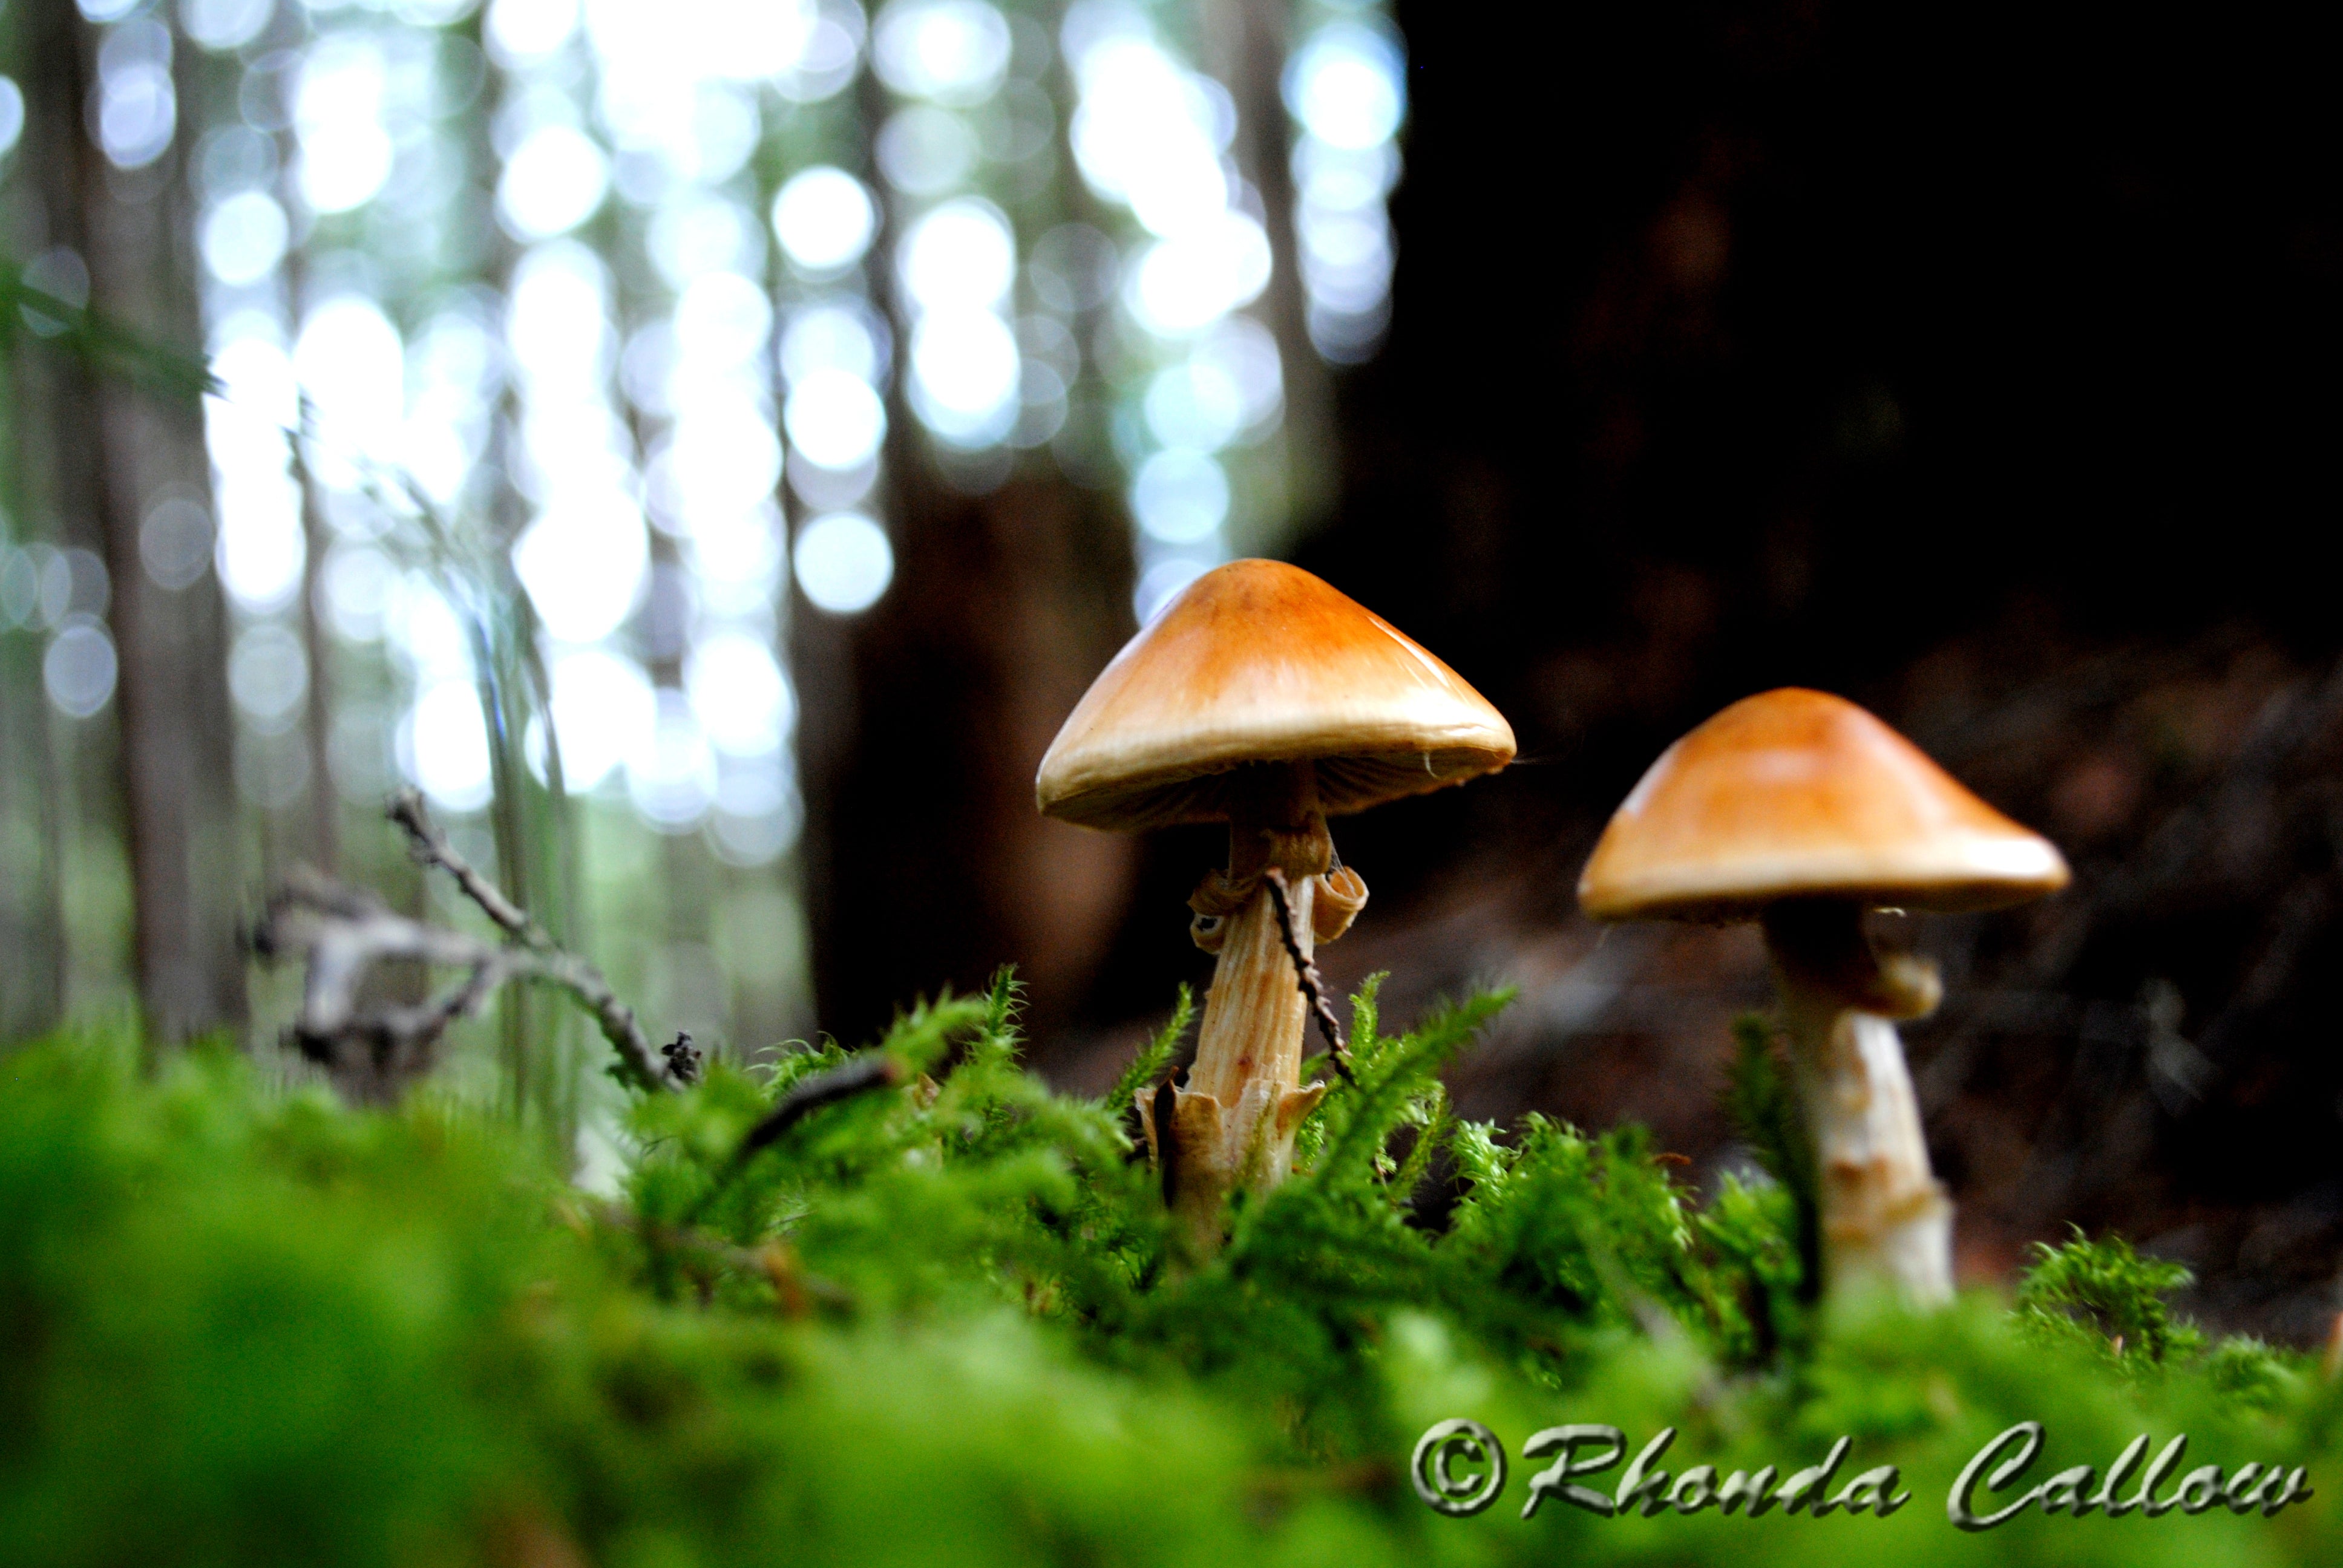 Autumn photo of mushrooms on the forest floor